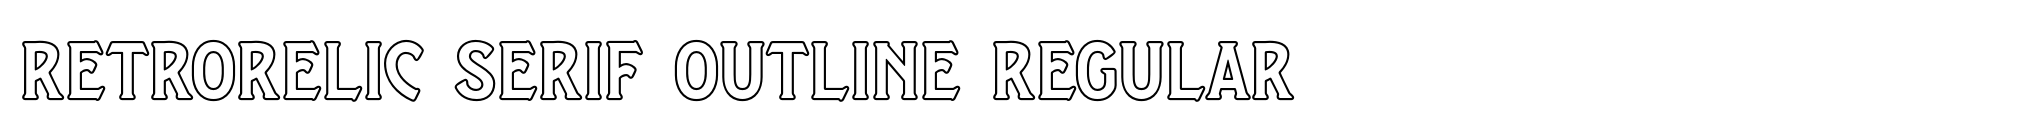 Retrorelic Serif Outline Regular image